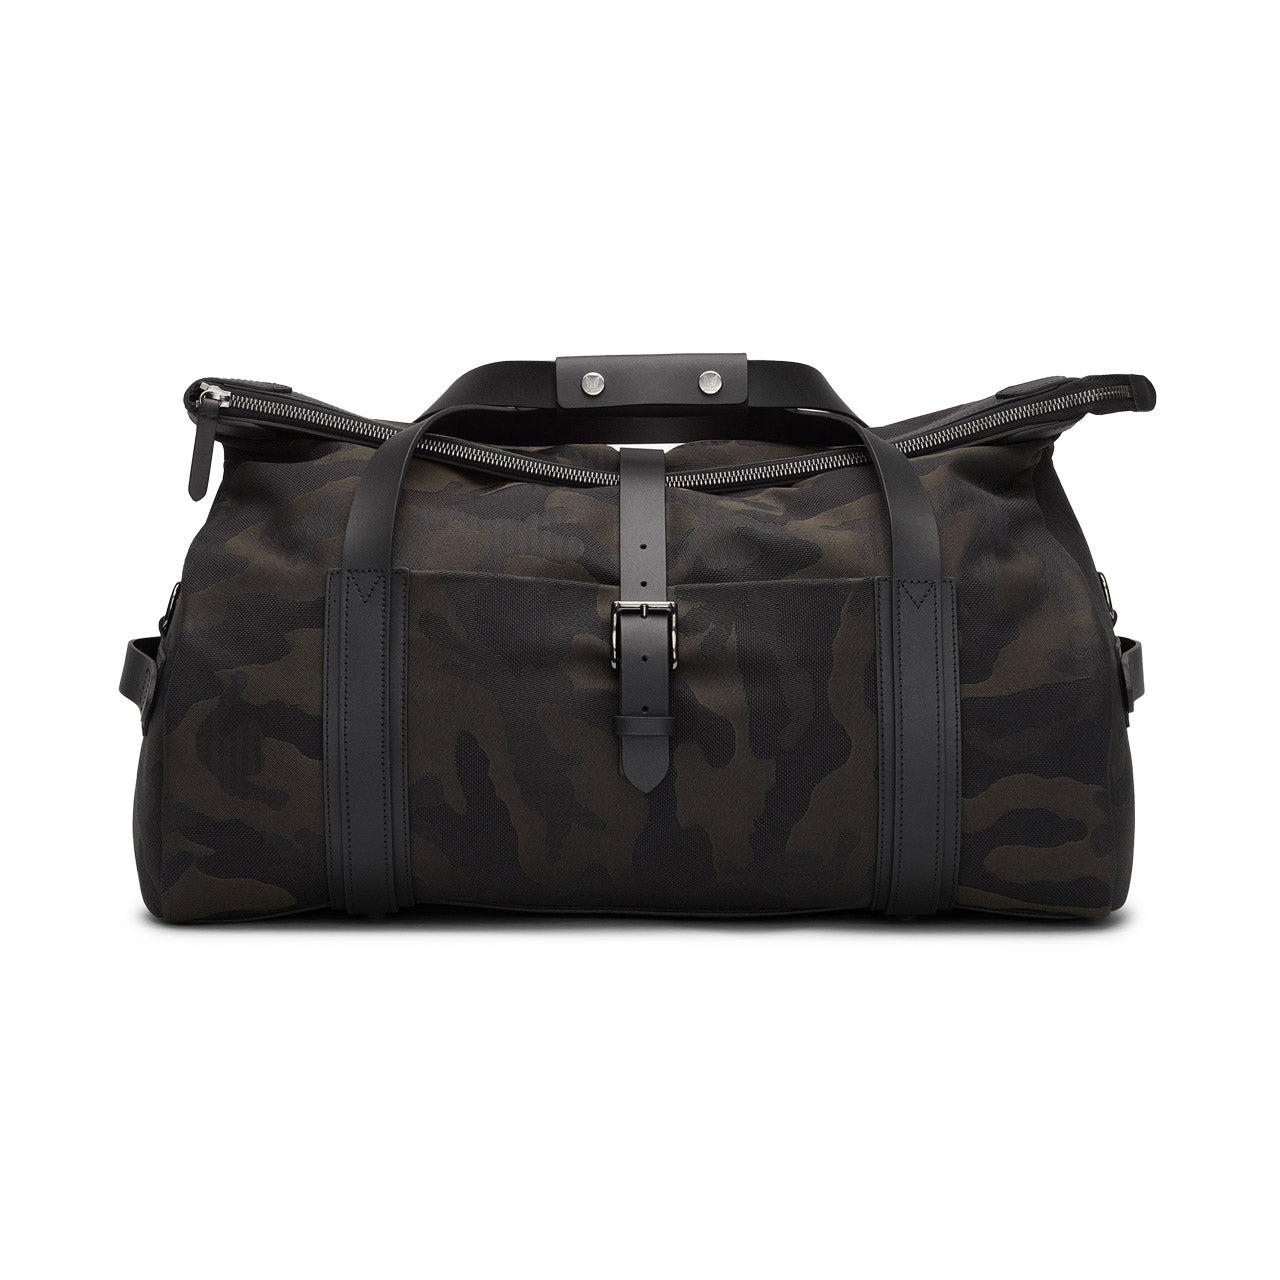 Green Camo Duffle Bag (New Weekender Design)